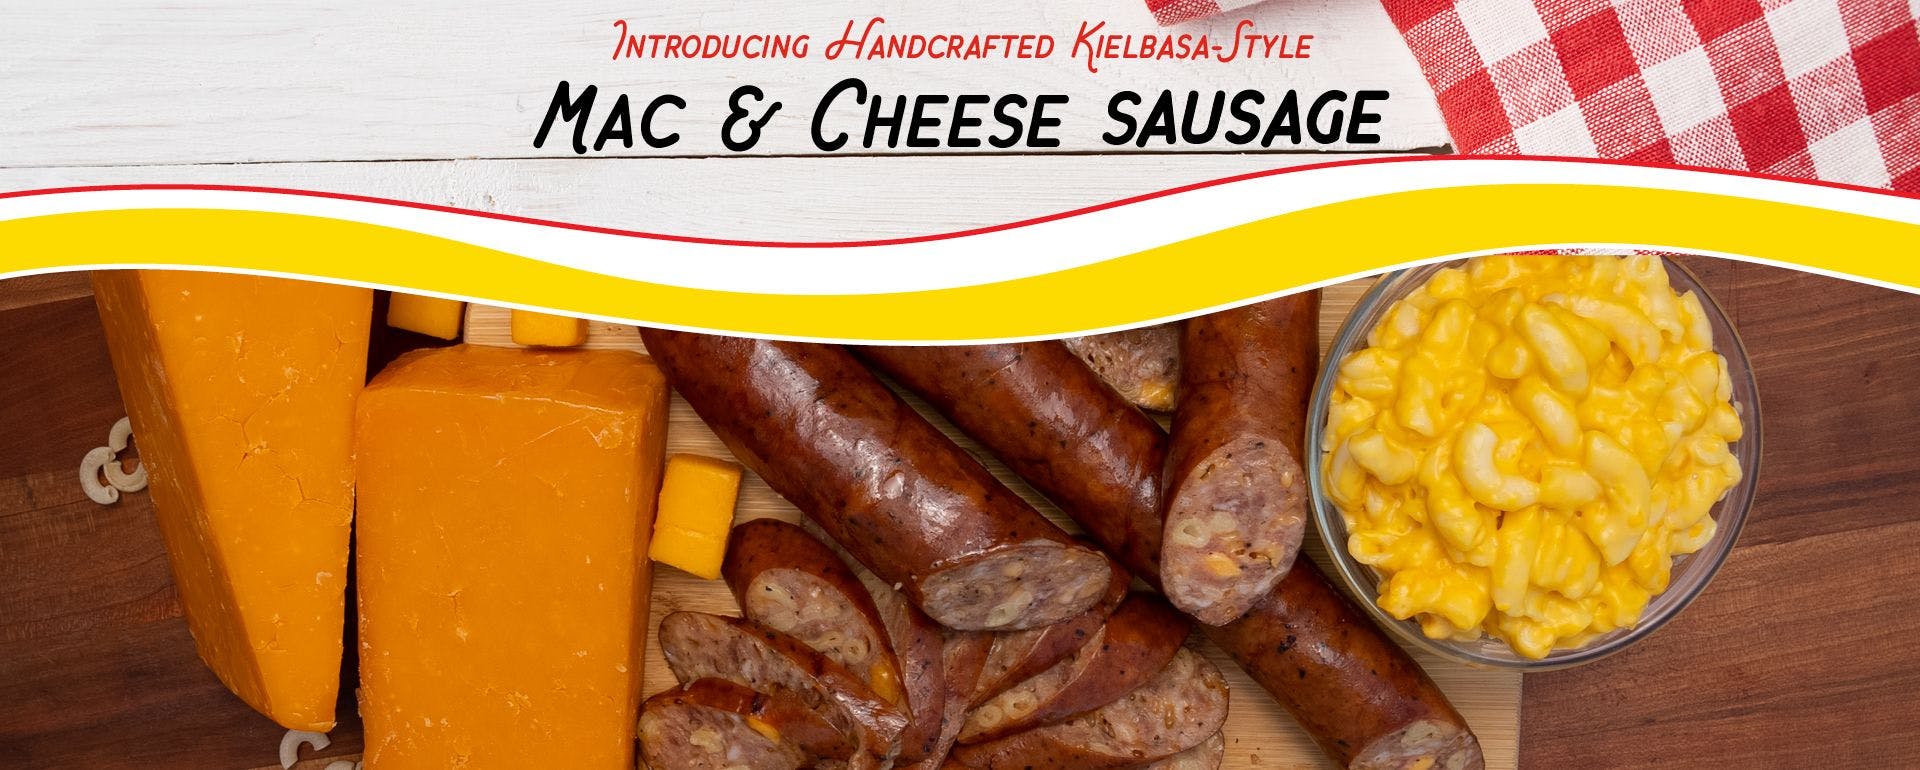 Mac & Cheese Sausage